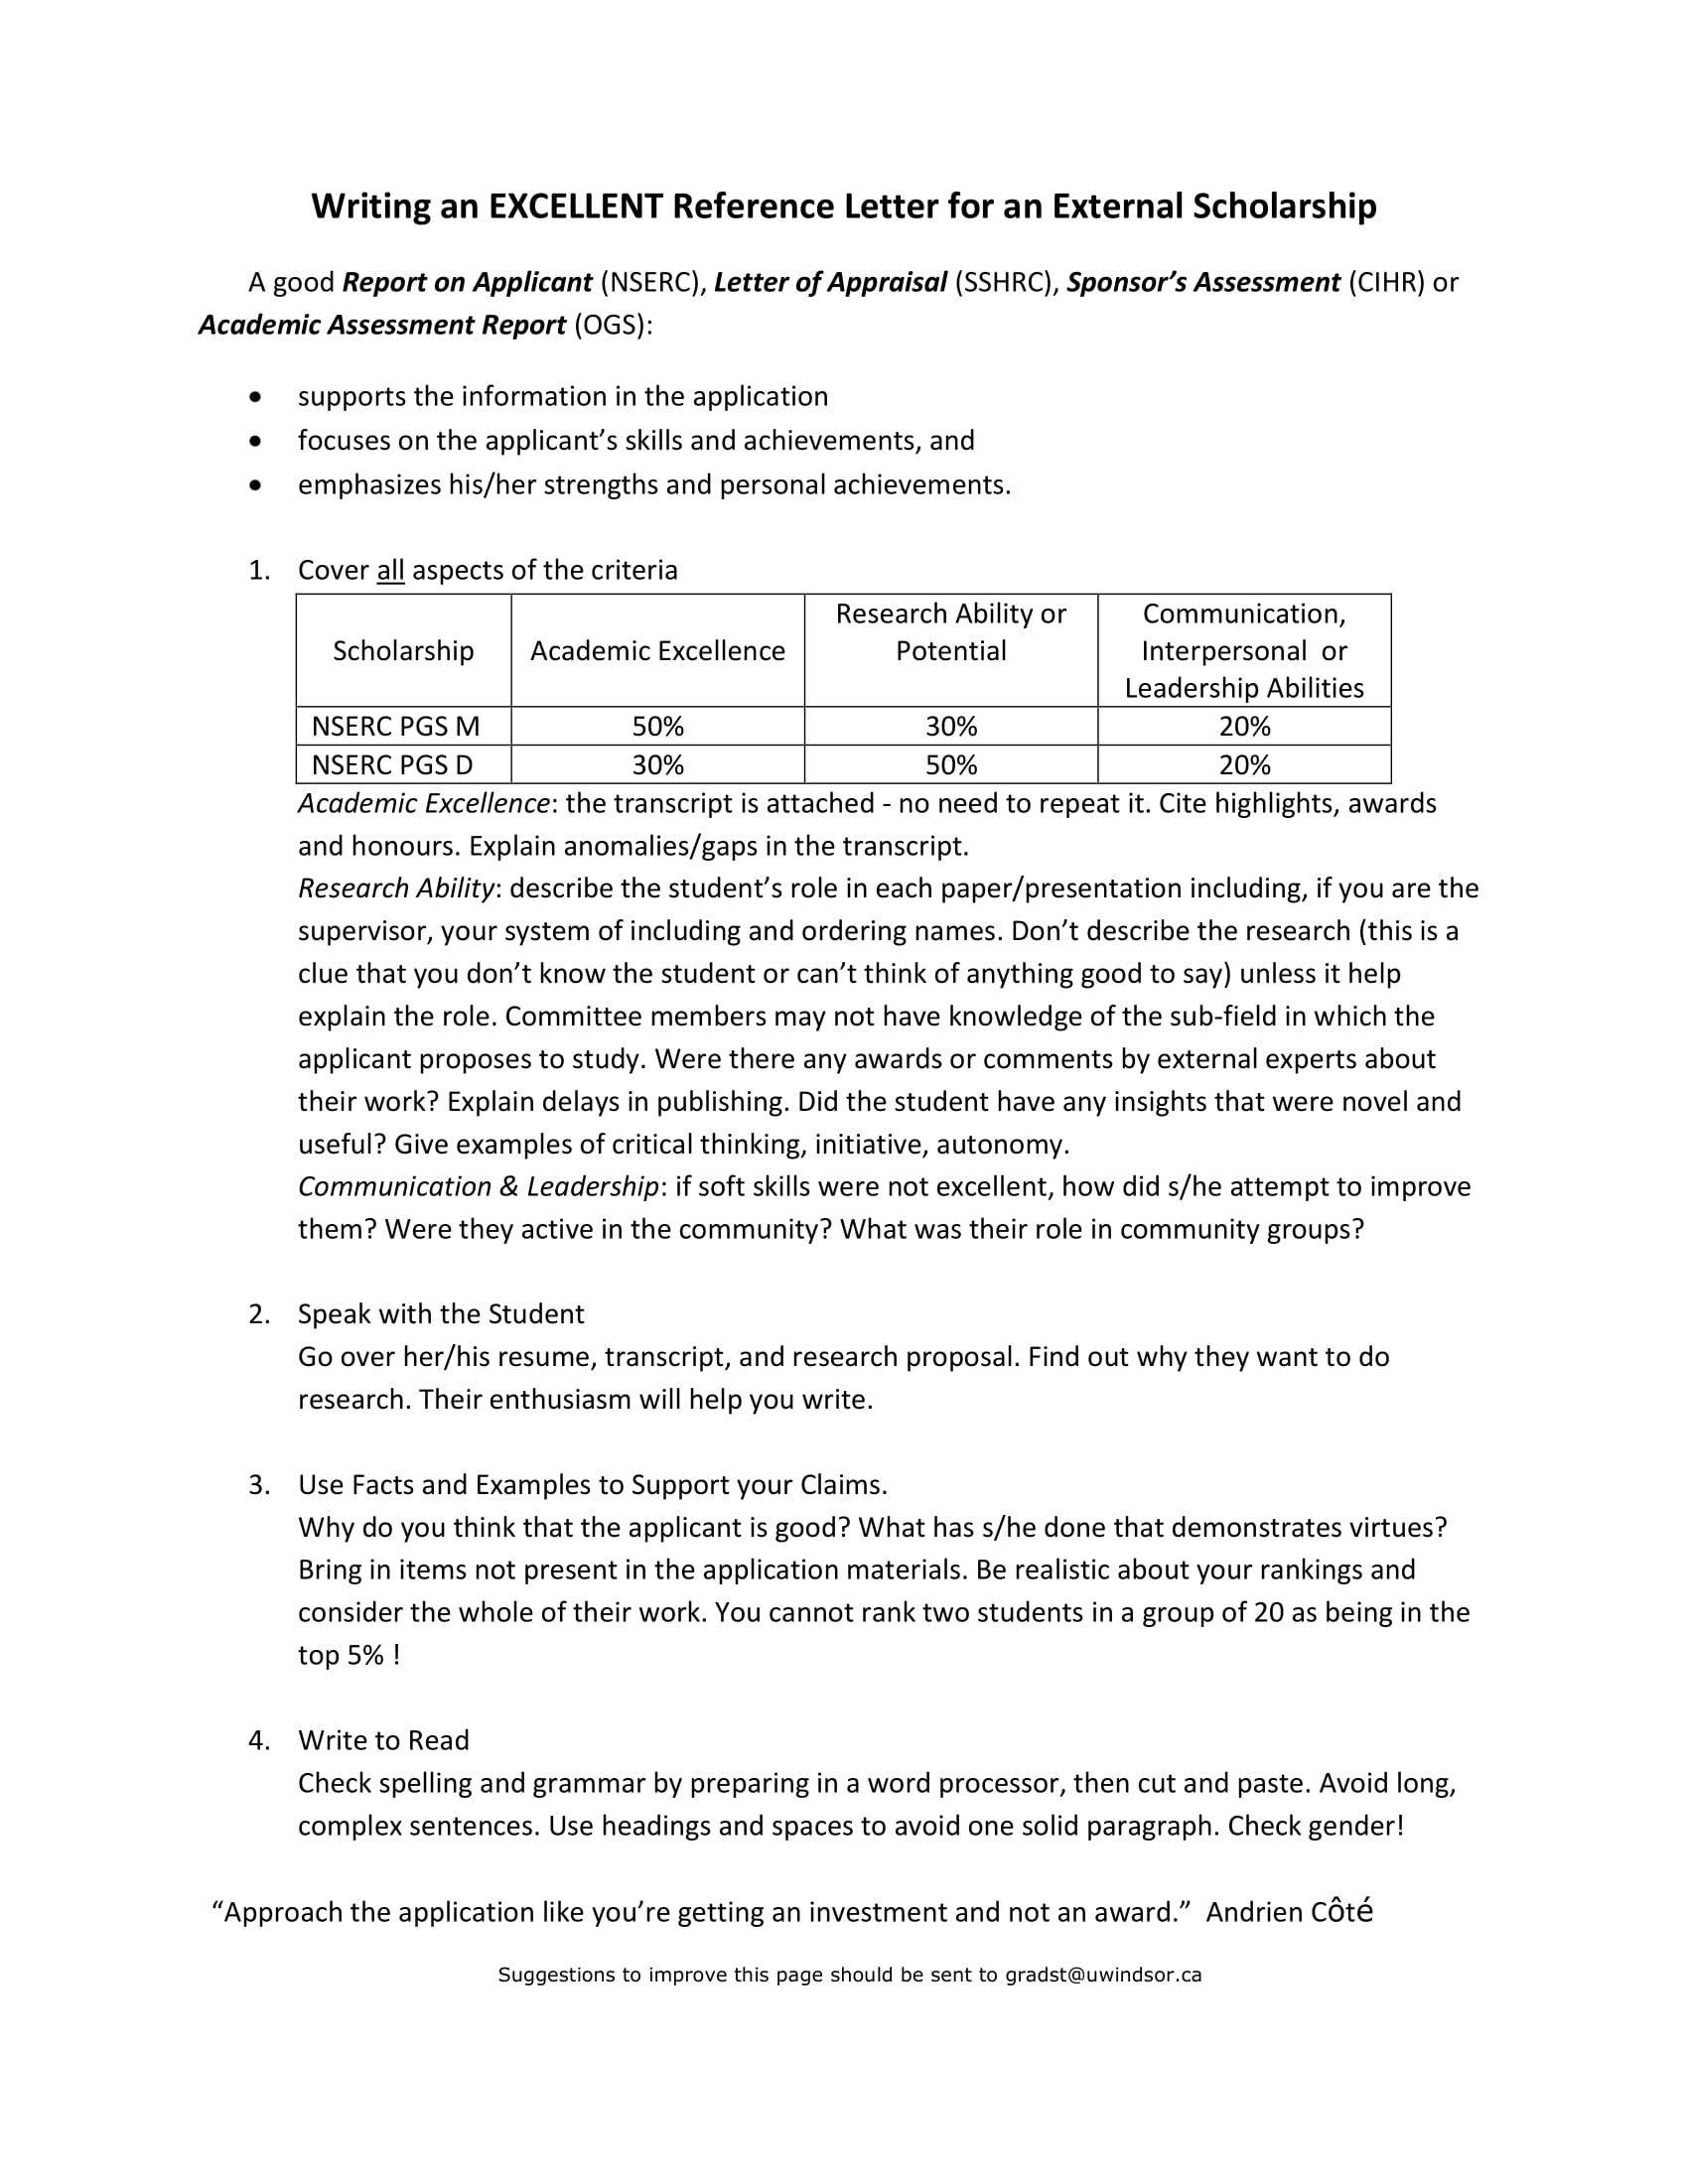 reference letter for external scholarship1